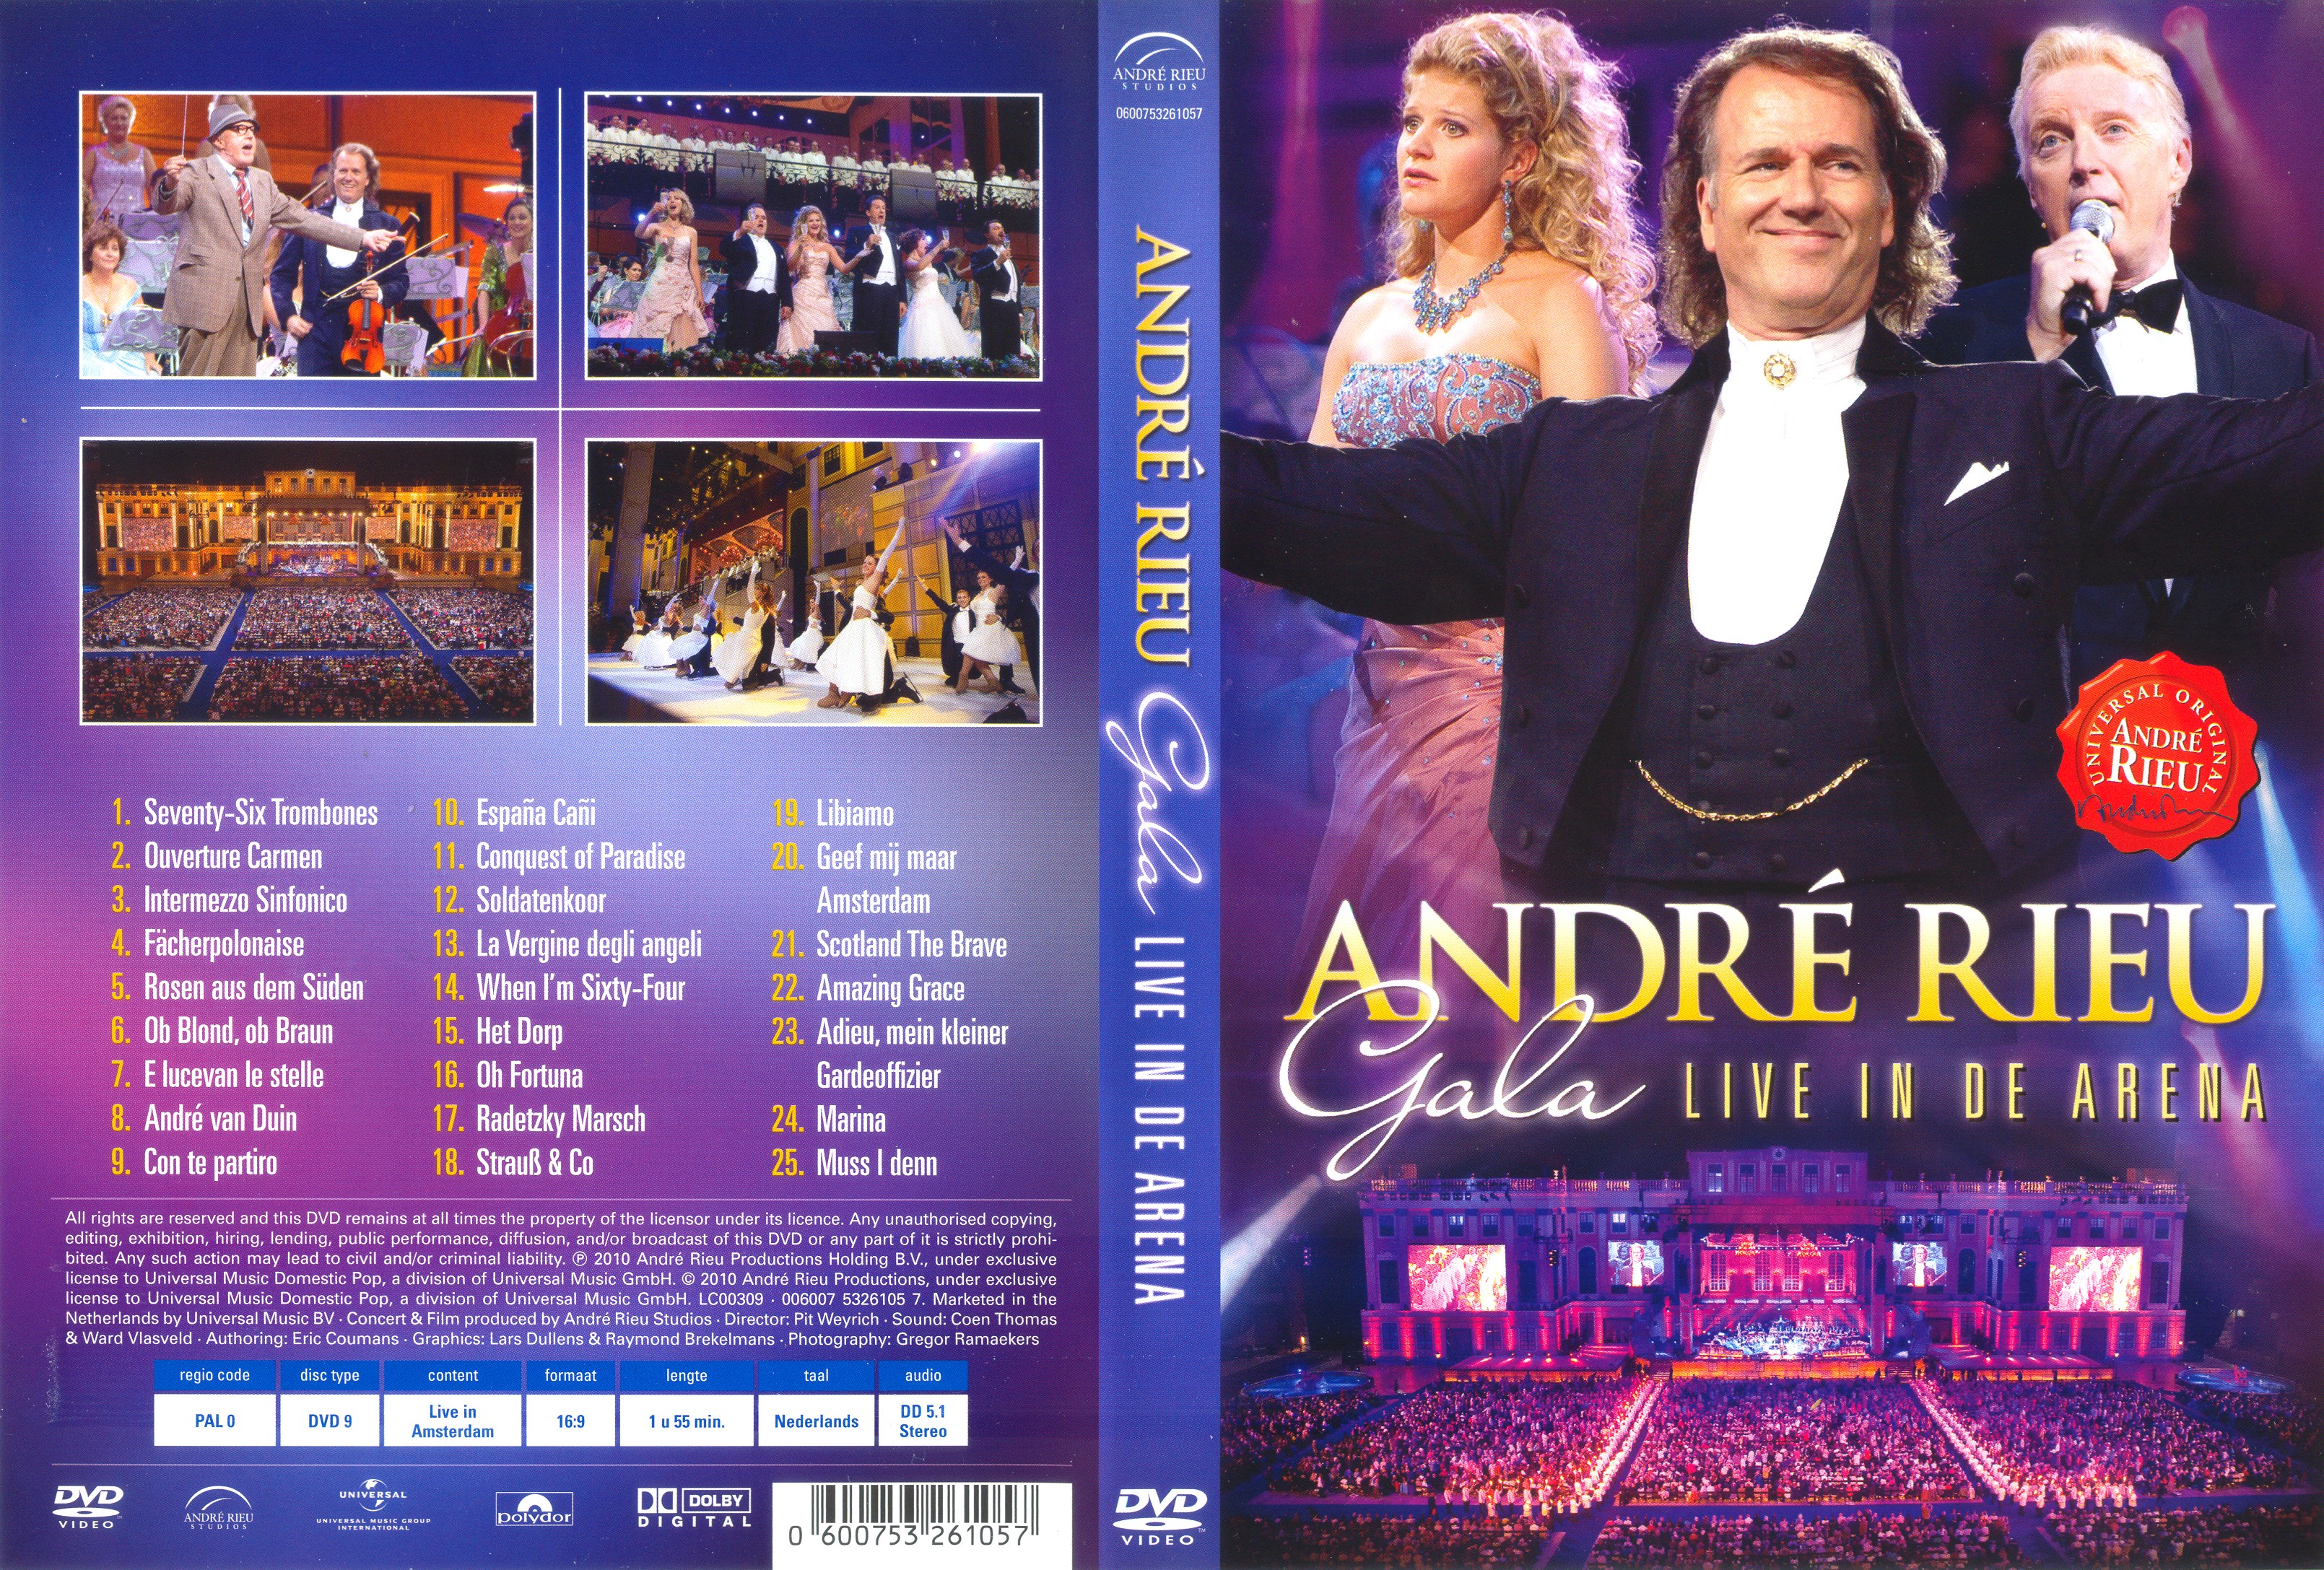 Jaquette DVD Andre Rieu Live in de Arena